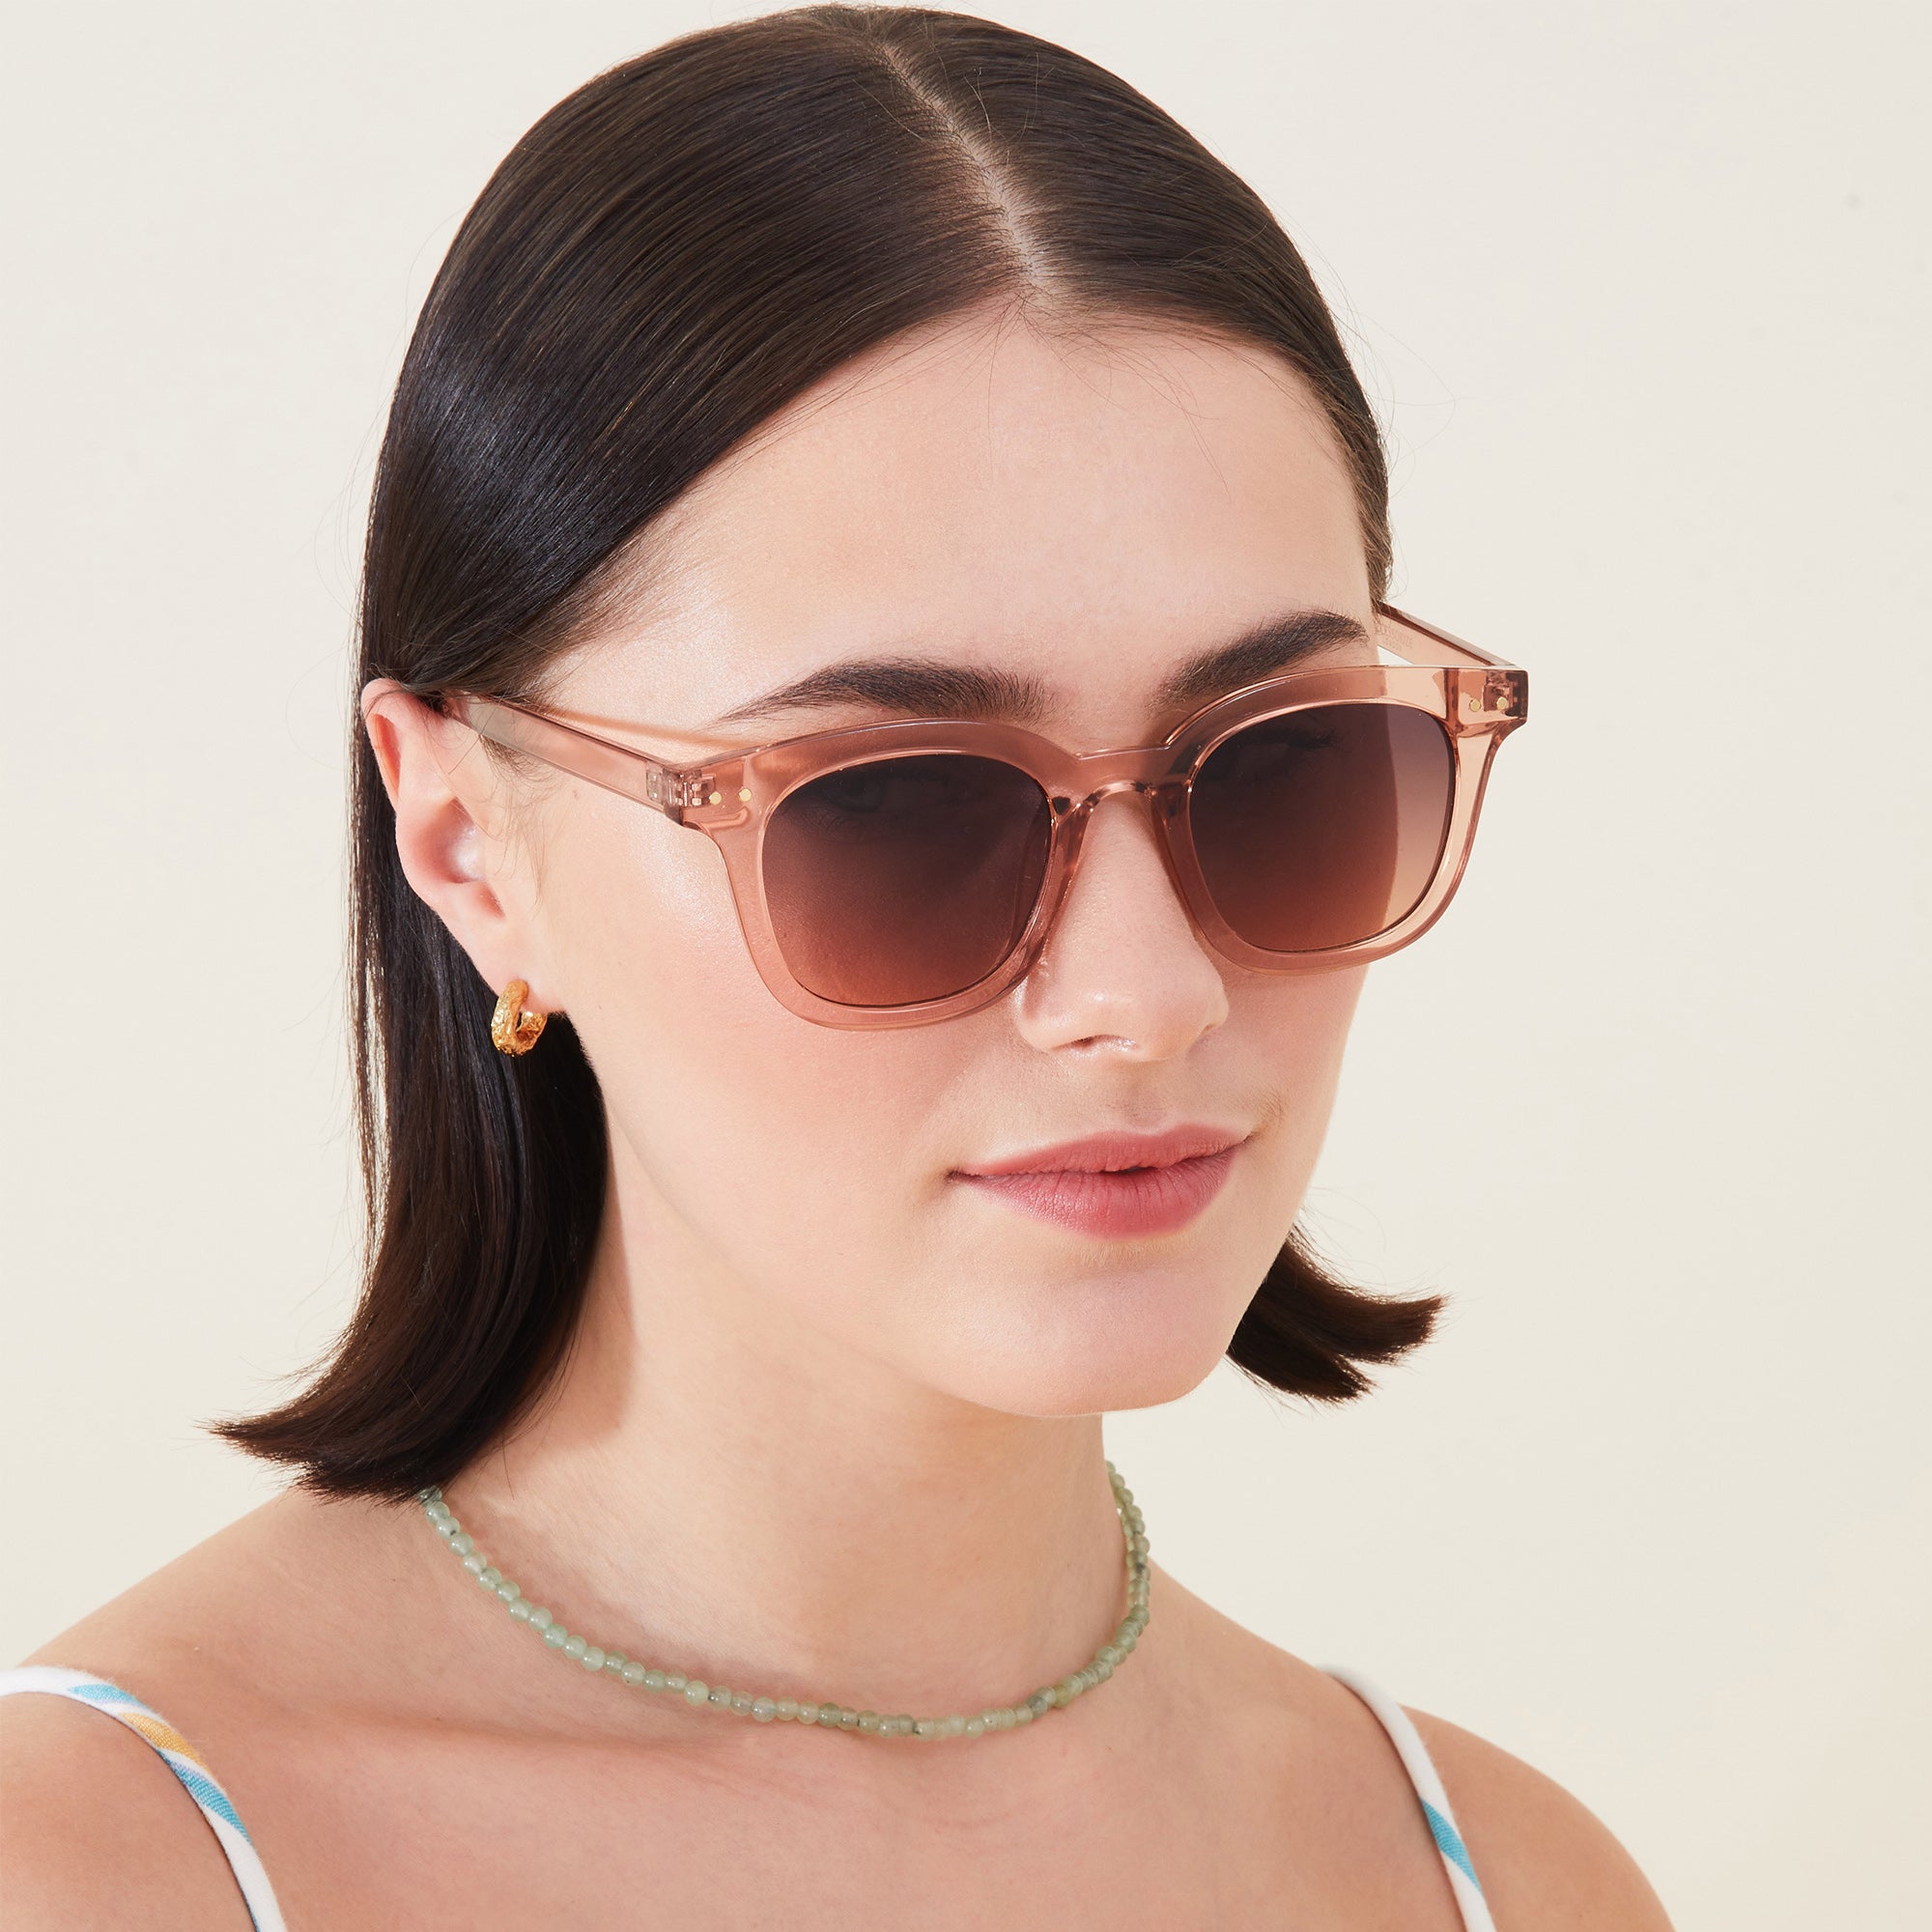 Accessorize London Women's Pink Opaque Ombre Lense Flattop Sunglasses